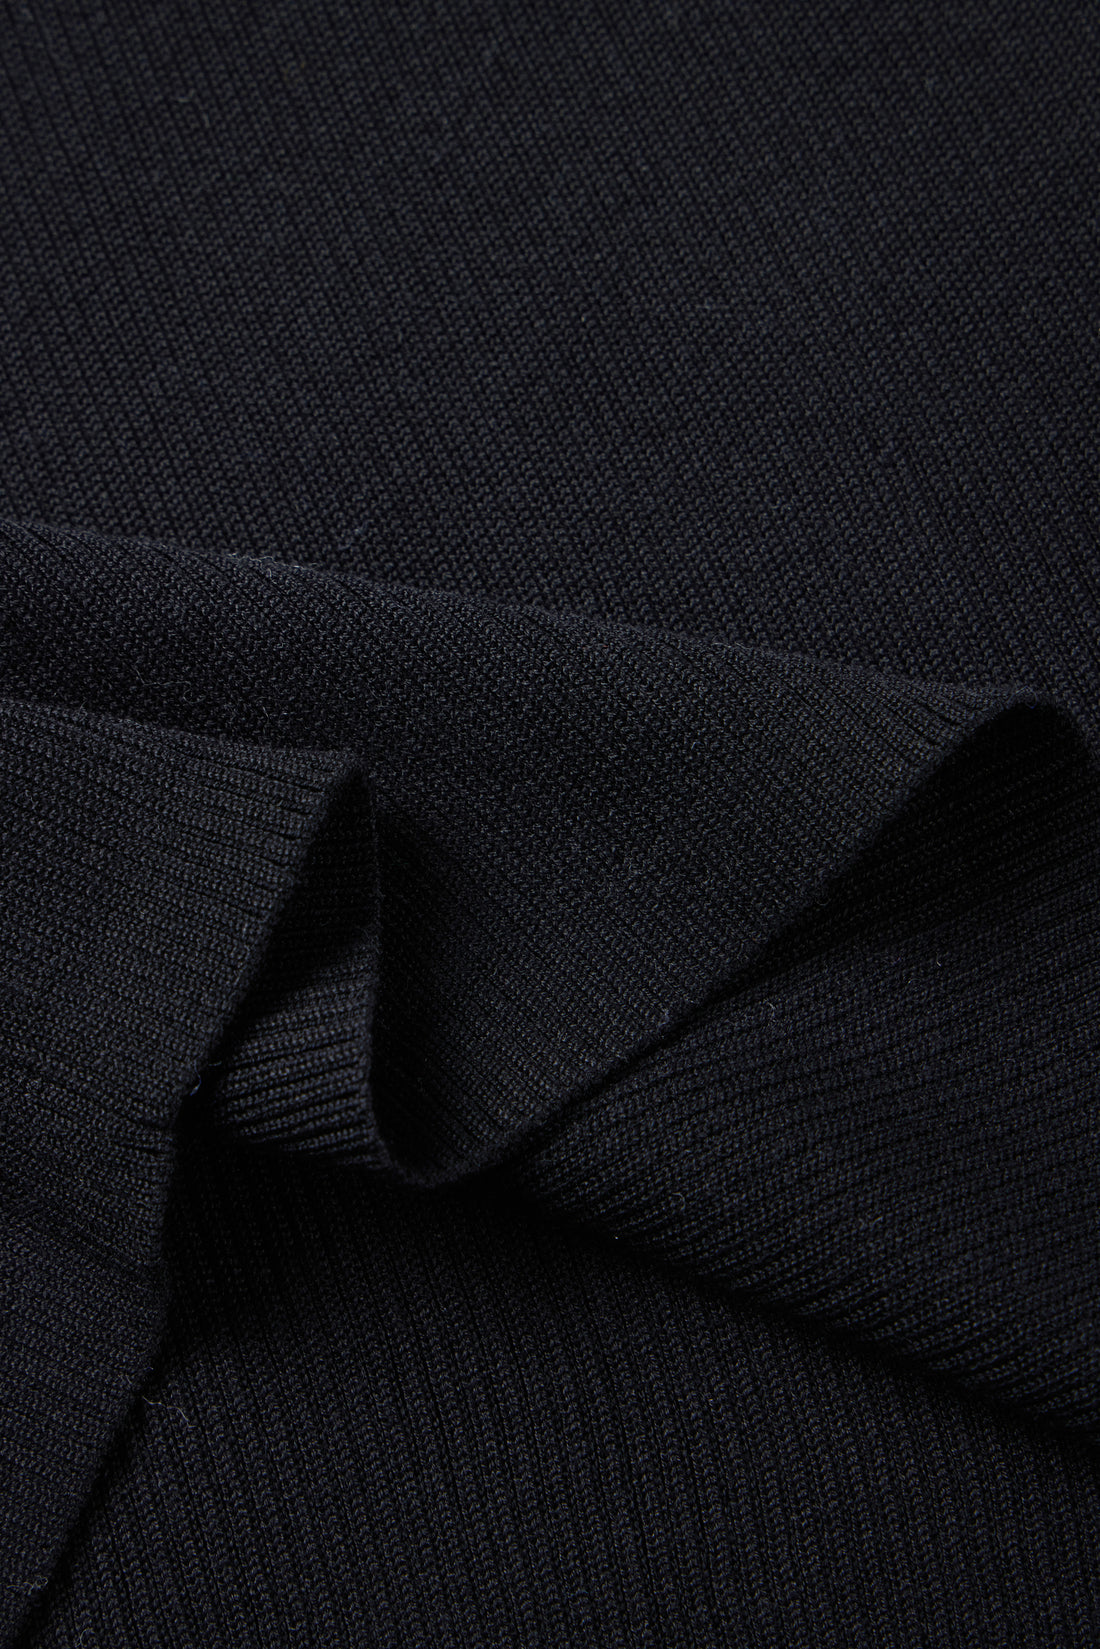 FENYA silk knit tank (Black)